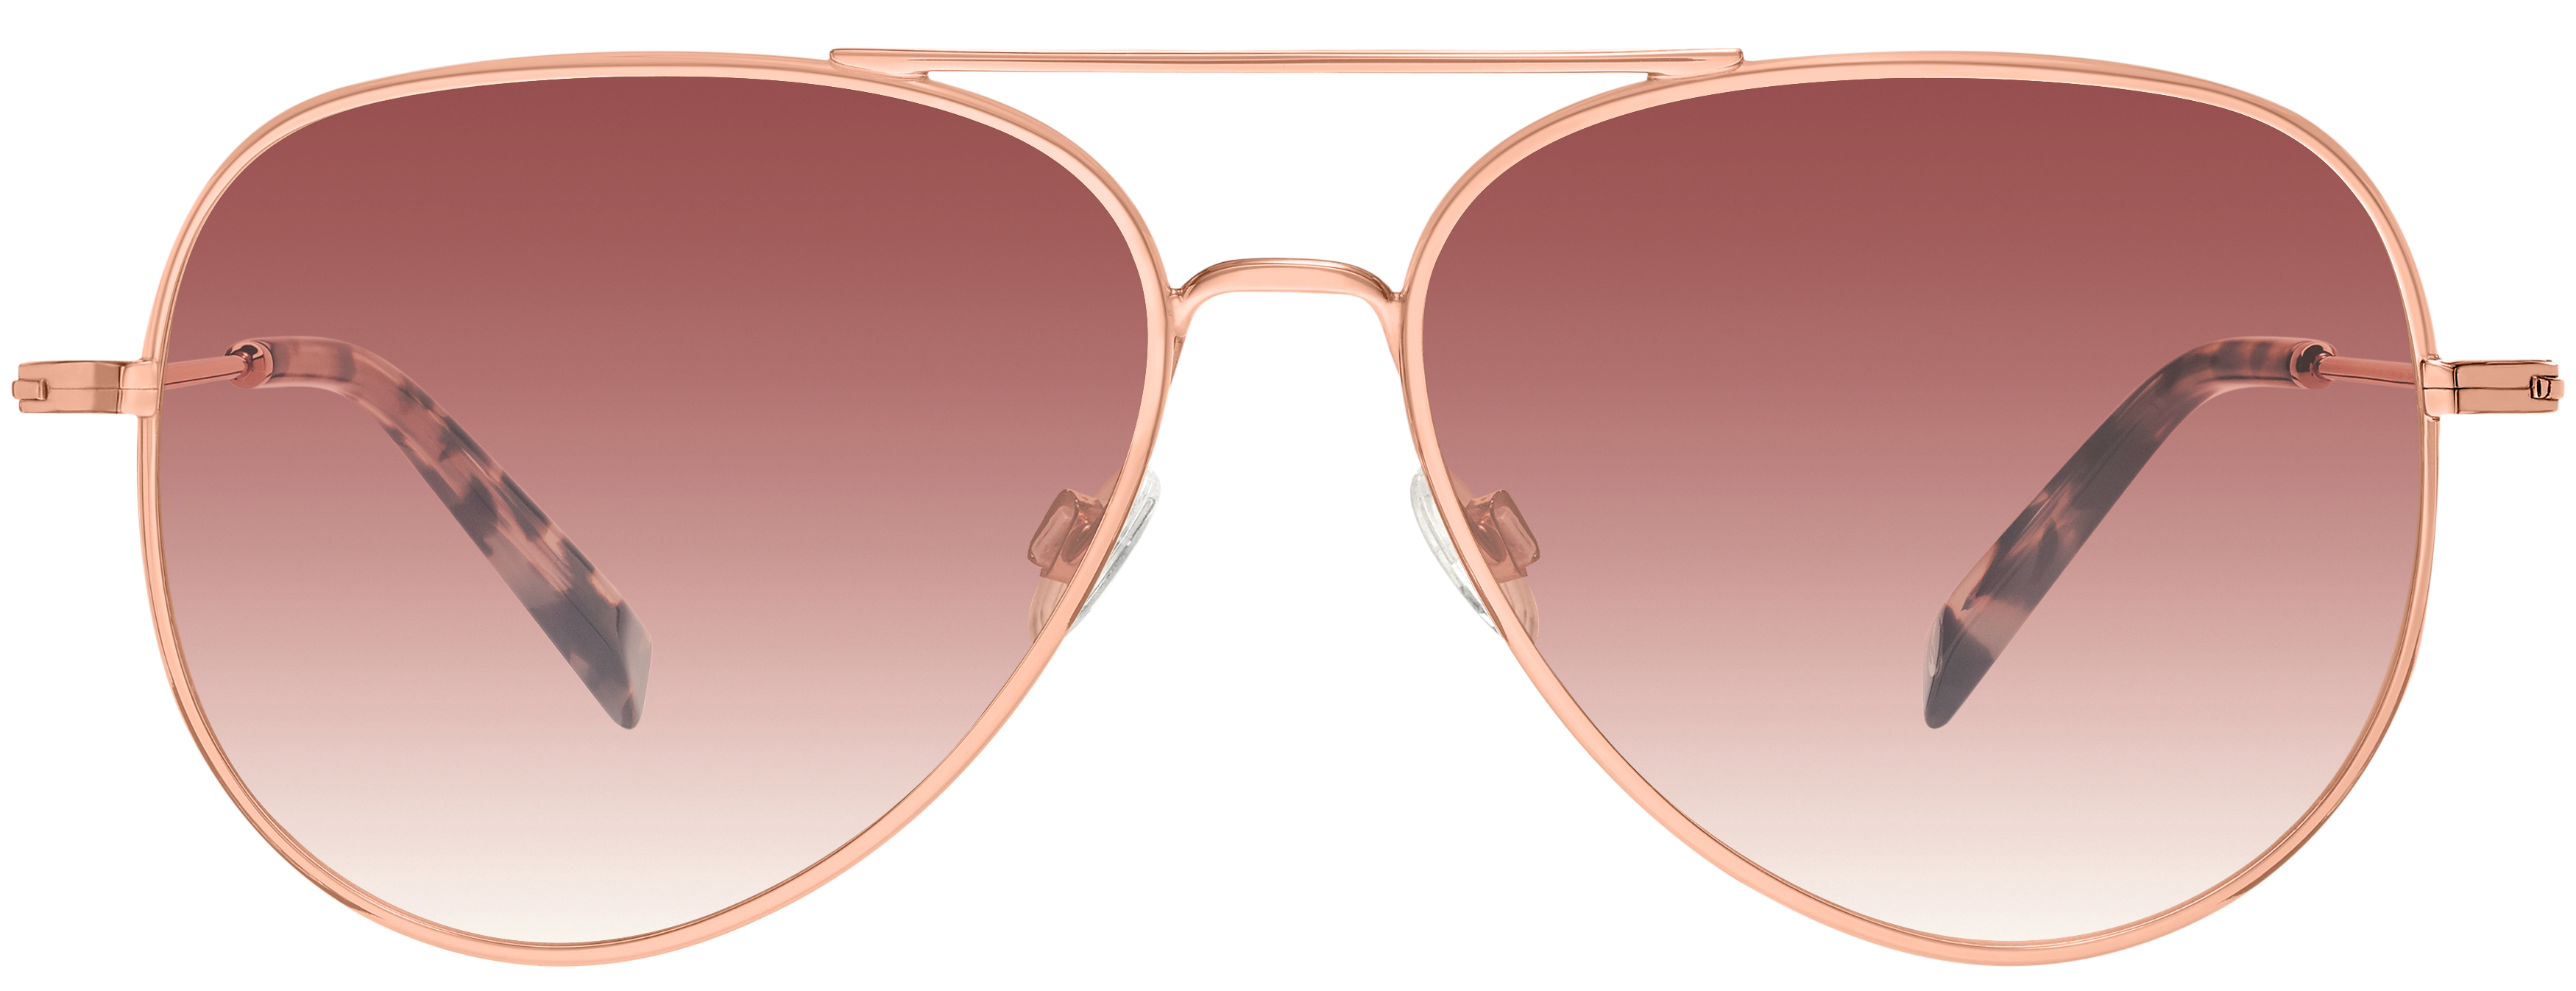 Aviator Sunglasses Transparent